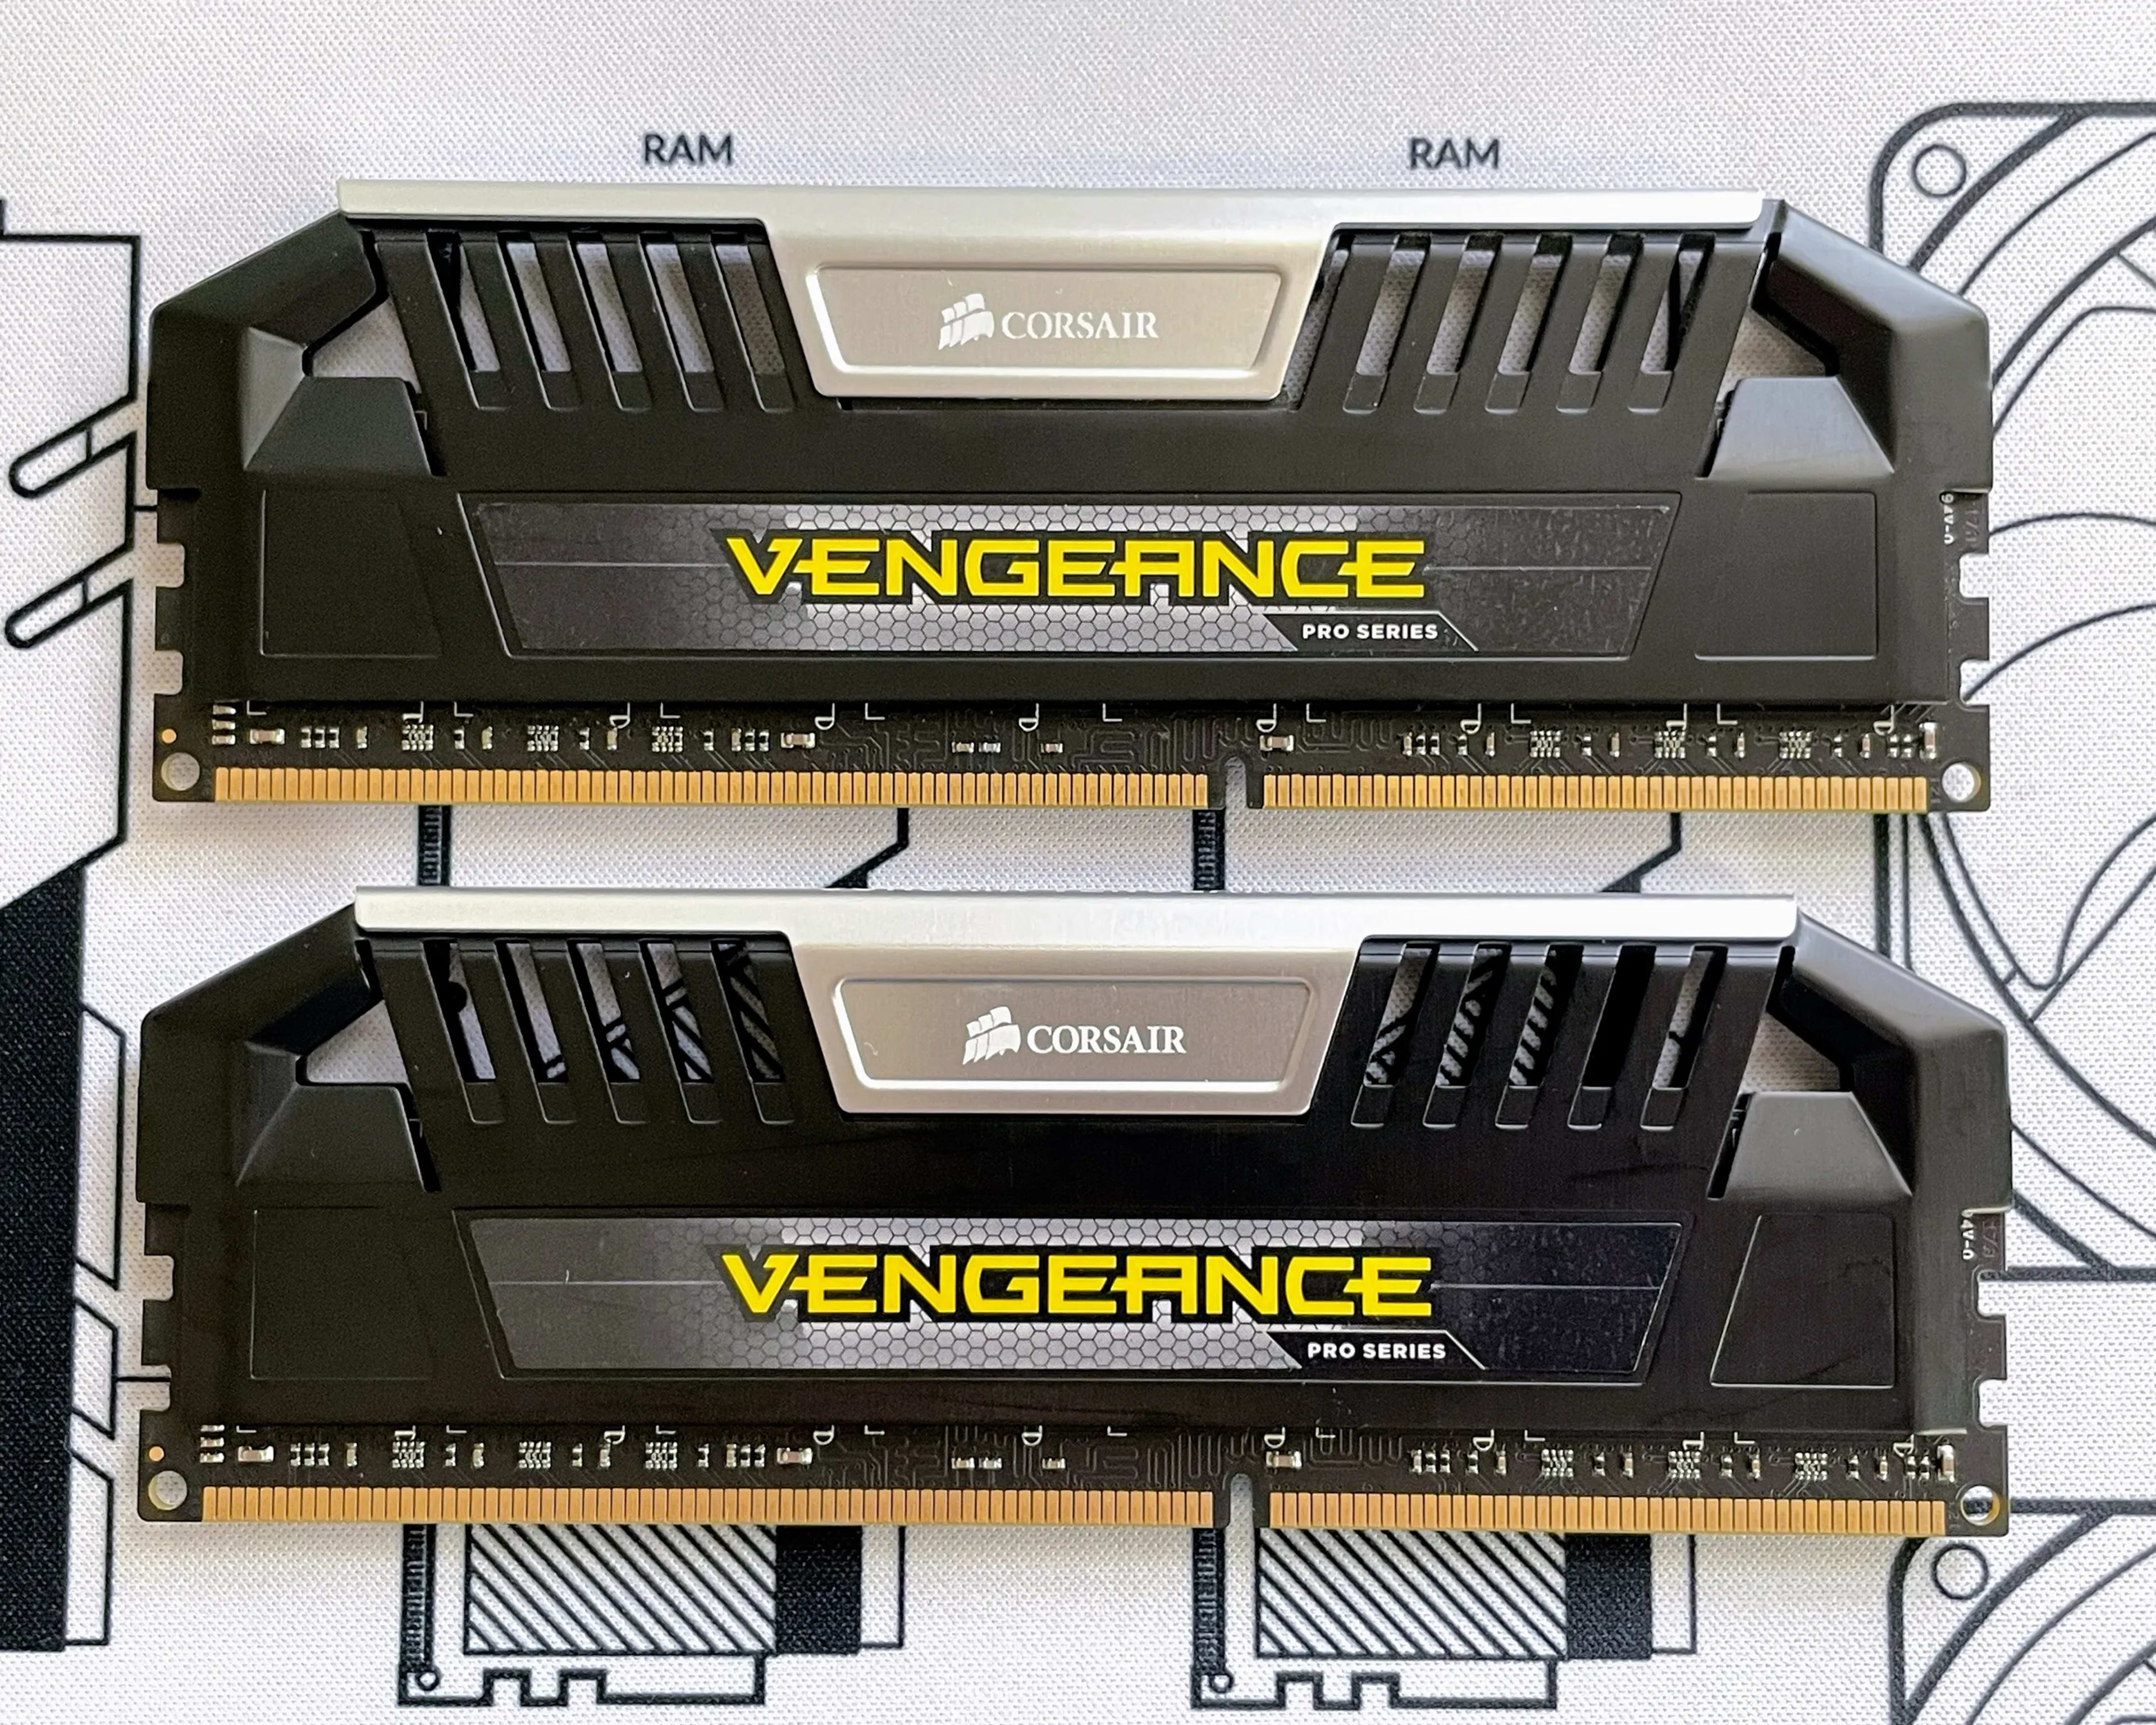 CORSAIR VENGEANCE Pro 16GB Kit (2x8GB) 2400 MHz DDR3 CL 11-13-13-31 (CMY16GX3M2A2400C11) RAM MEMORY